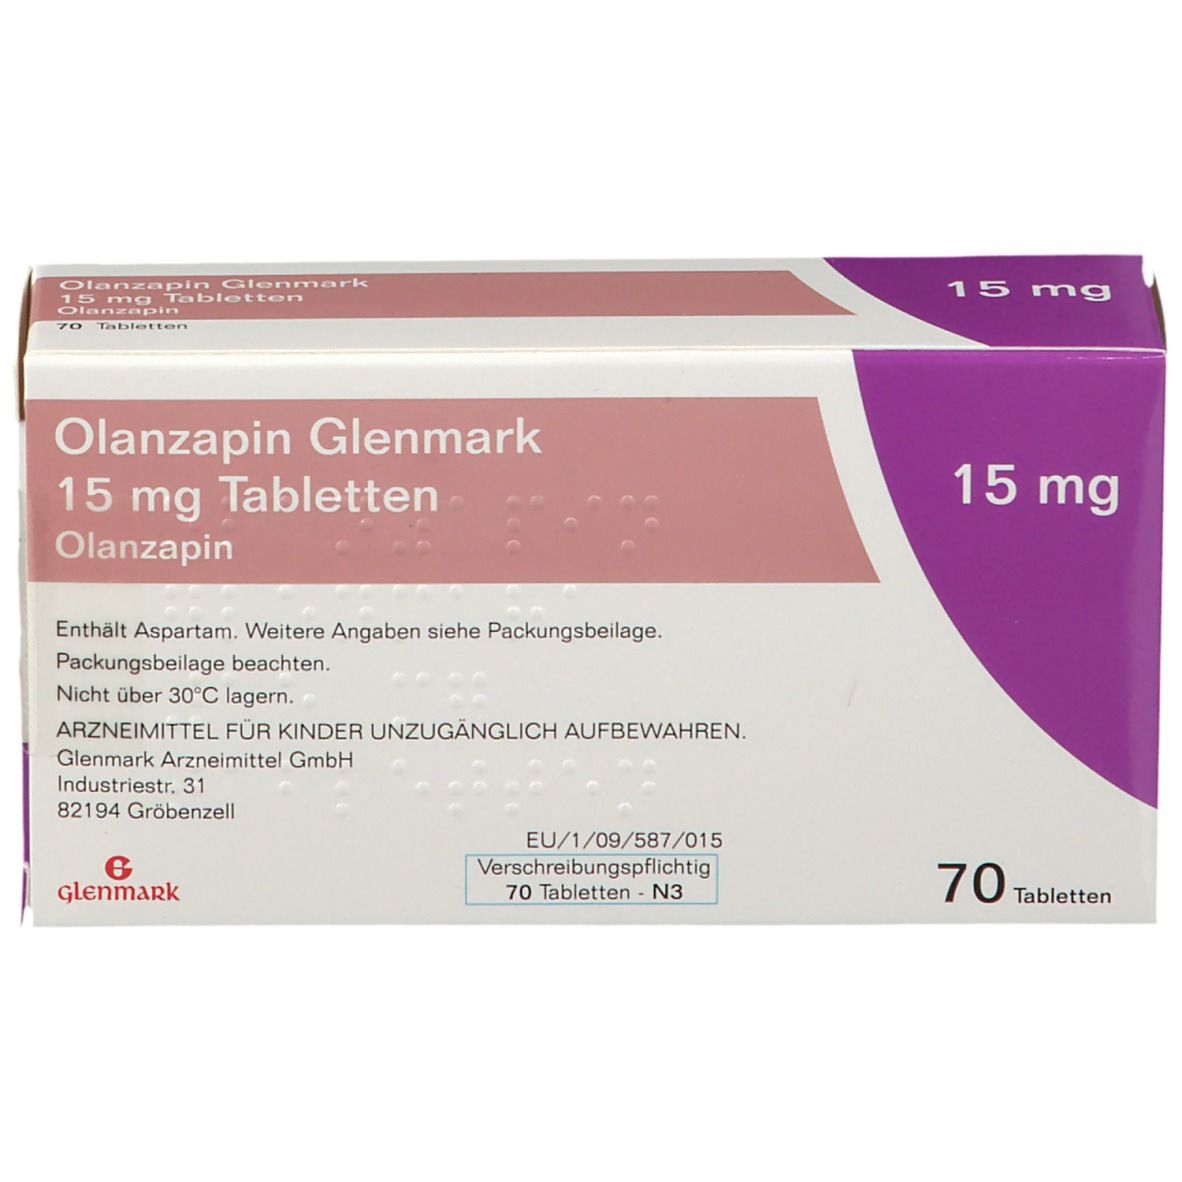 Olanzapin Glenmark 15 mg